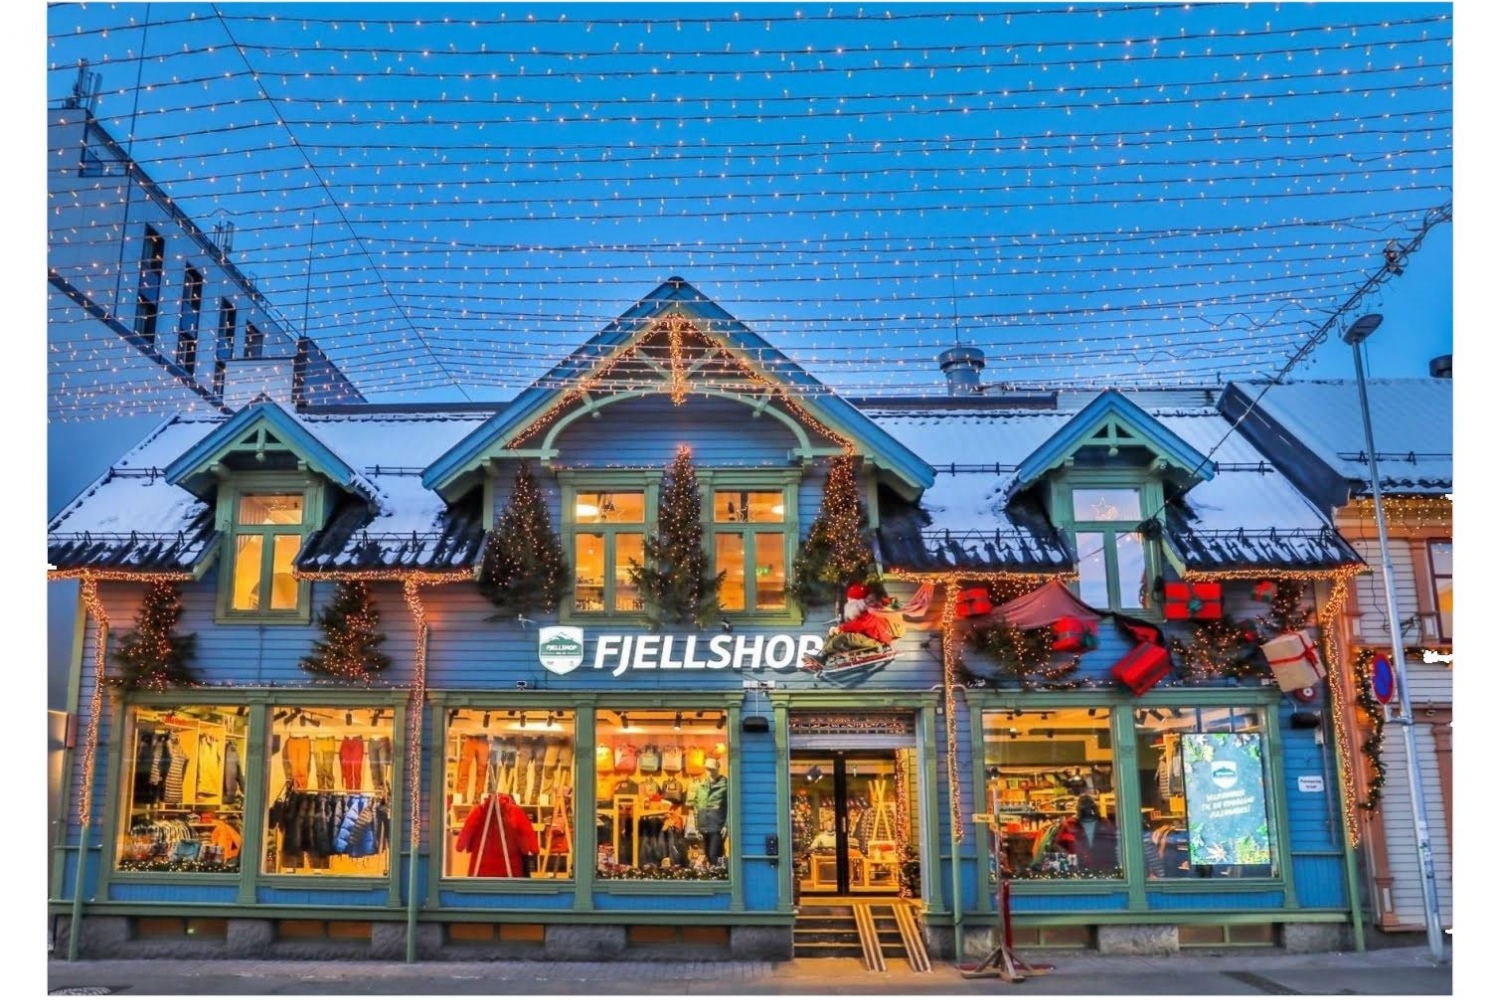 Fjellshop entrance with Christmas decorations